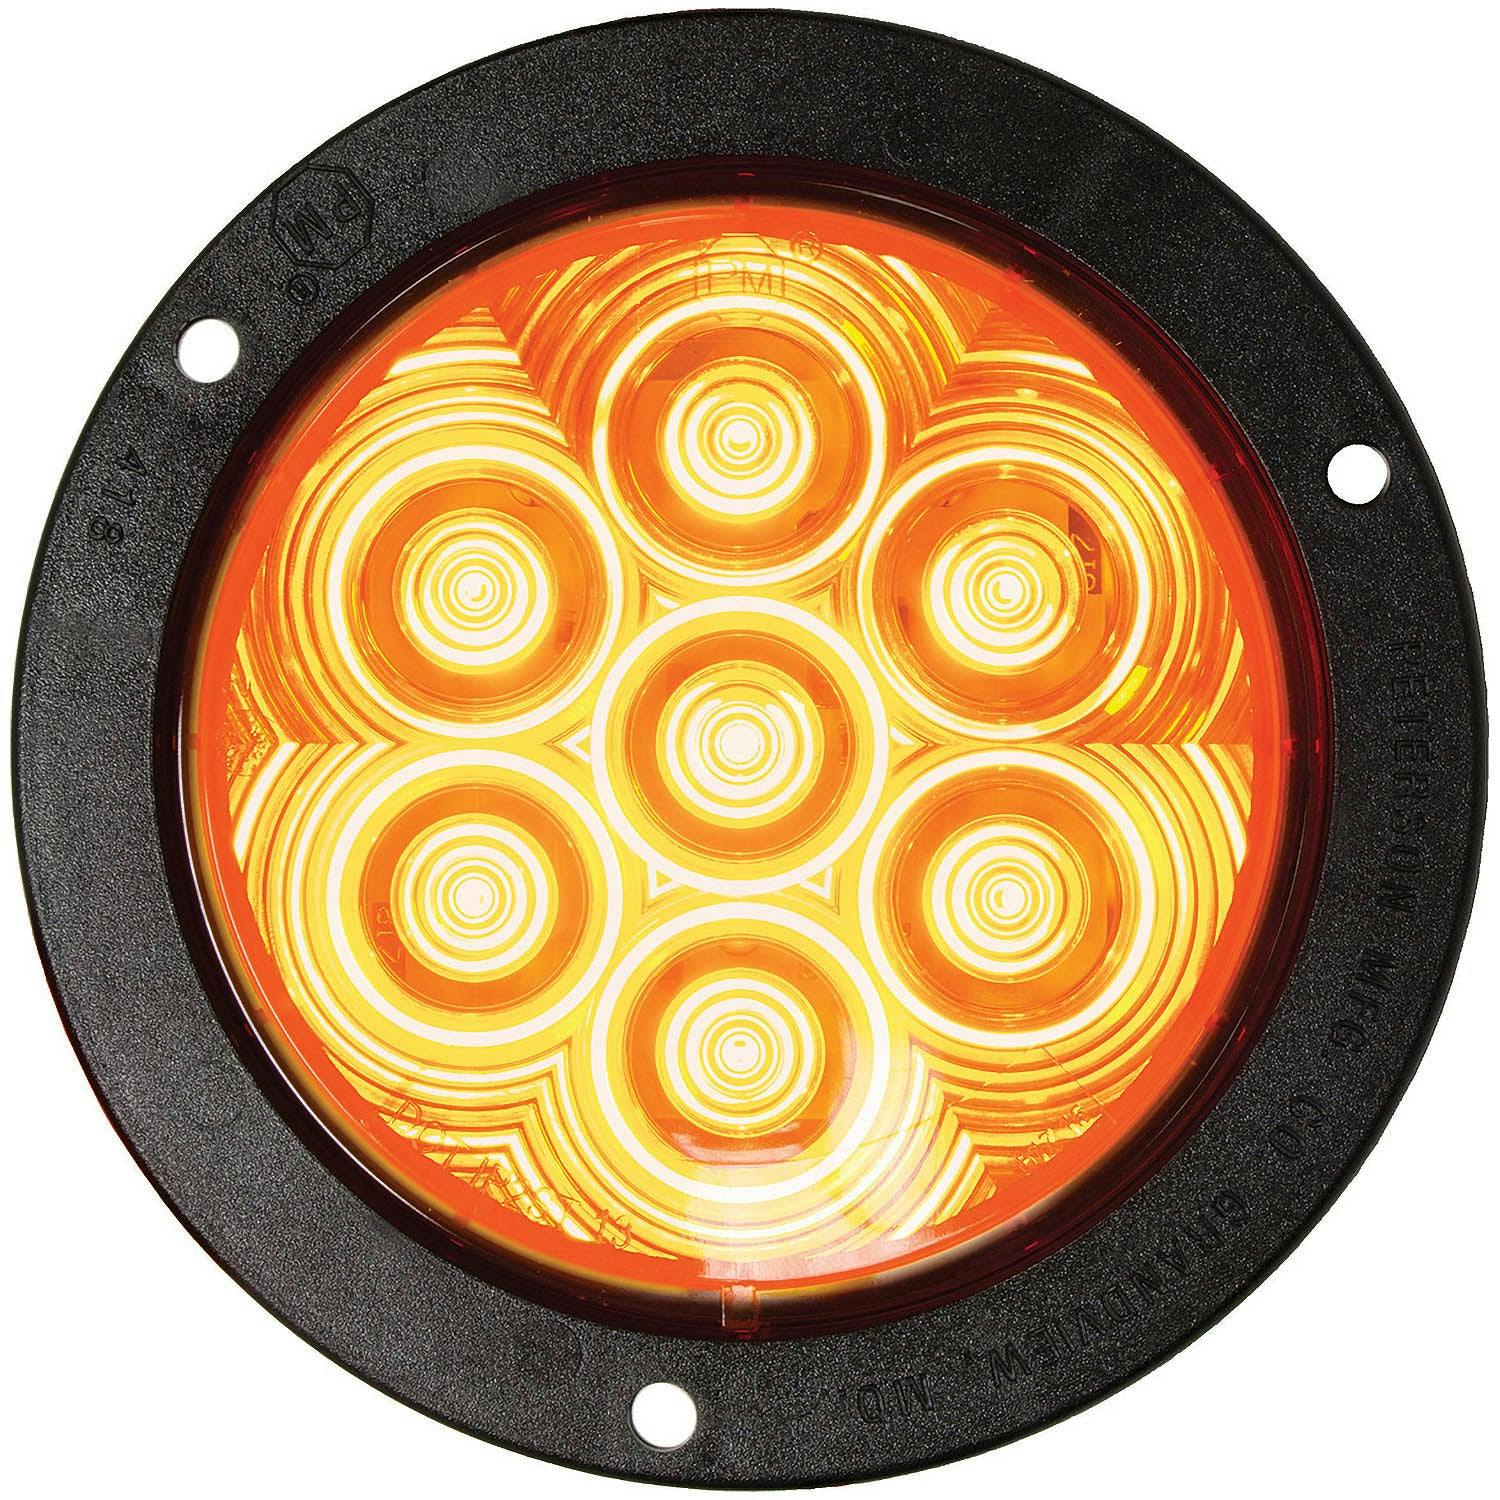 LED Turn Signal, Front & Rear, Round, Flange-Mount 4", amber, bulk pack (Pack of 50)